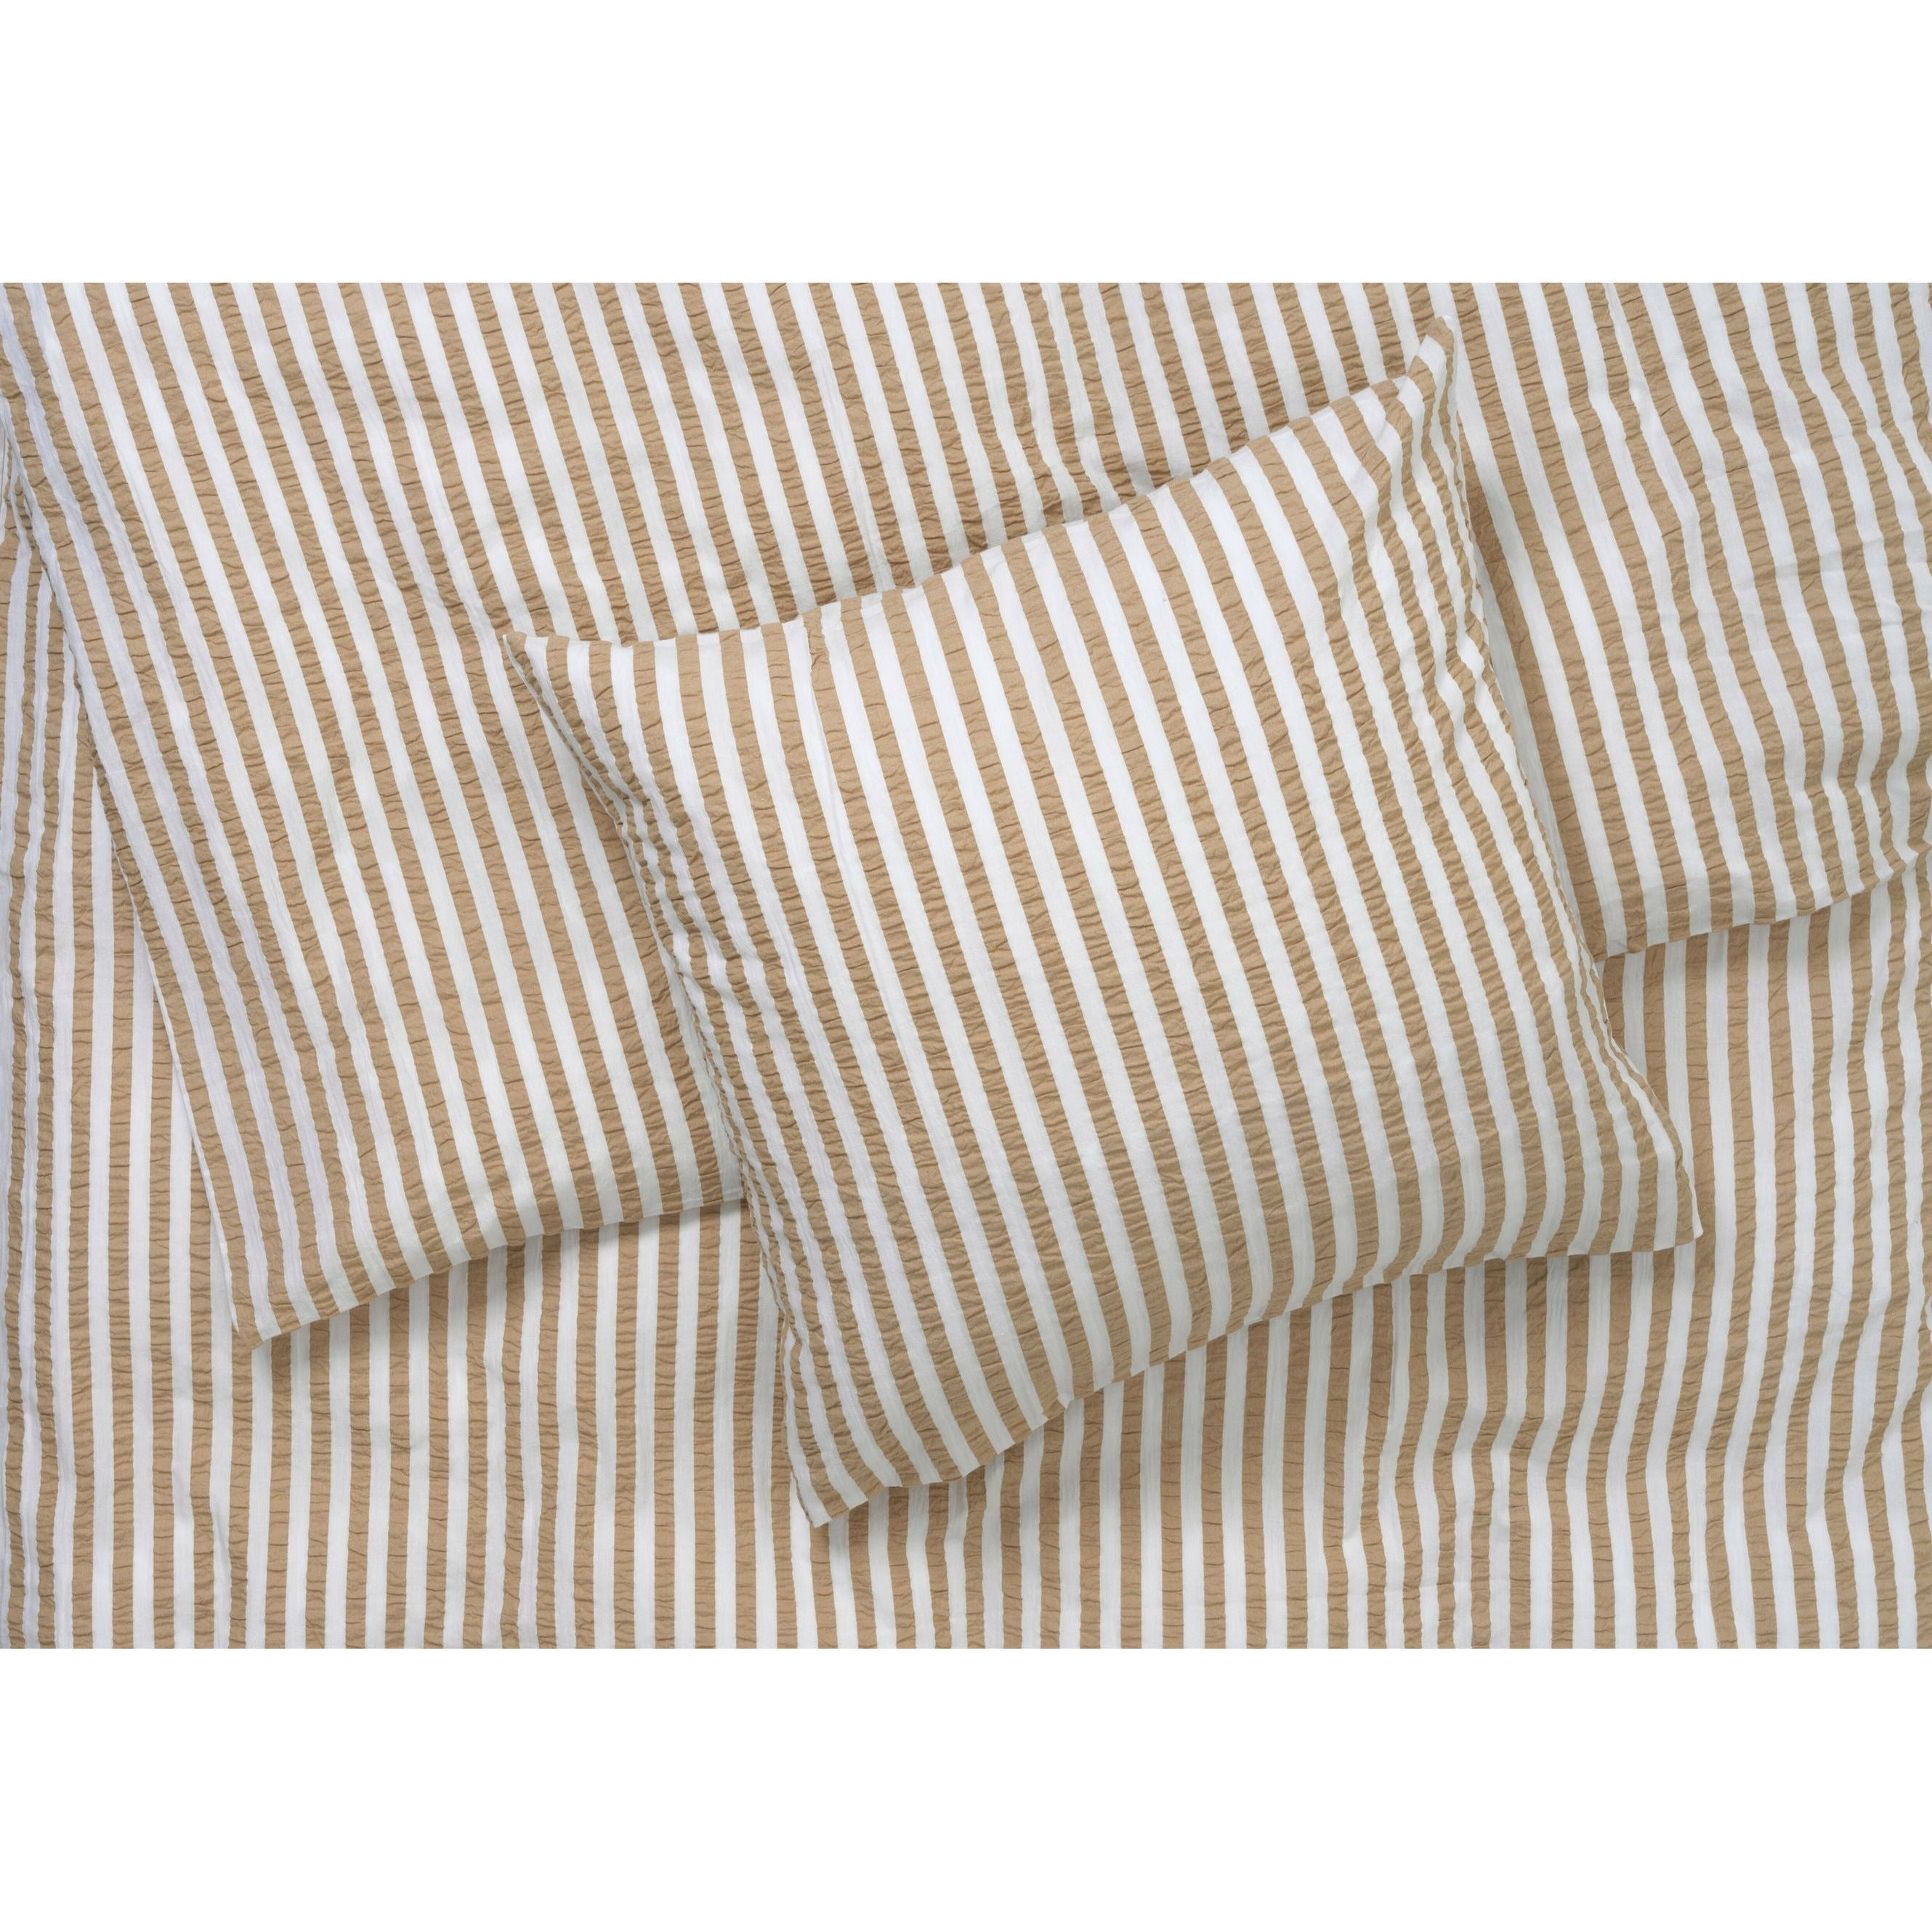 Juna Bæk & bølge linjer säng linne 200x220 cm, sand/vit